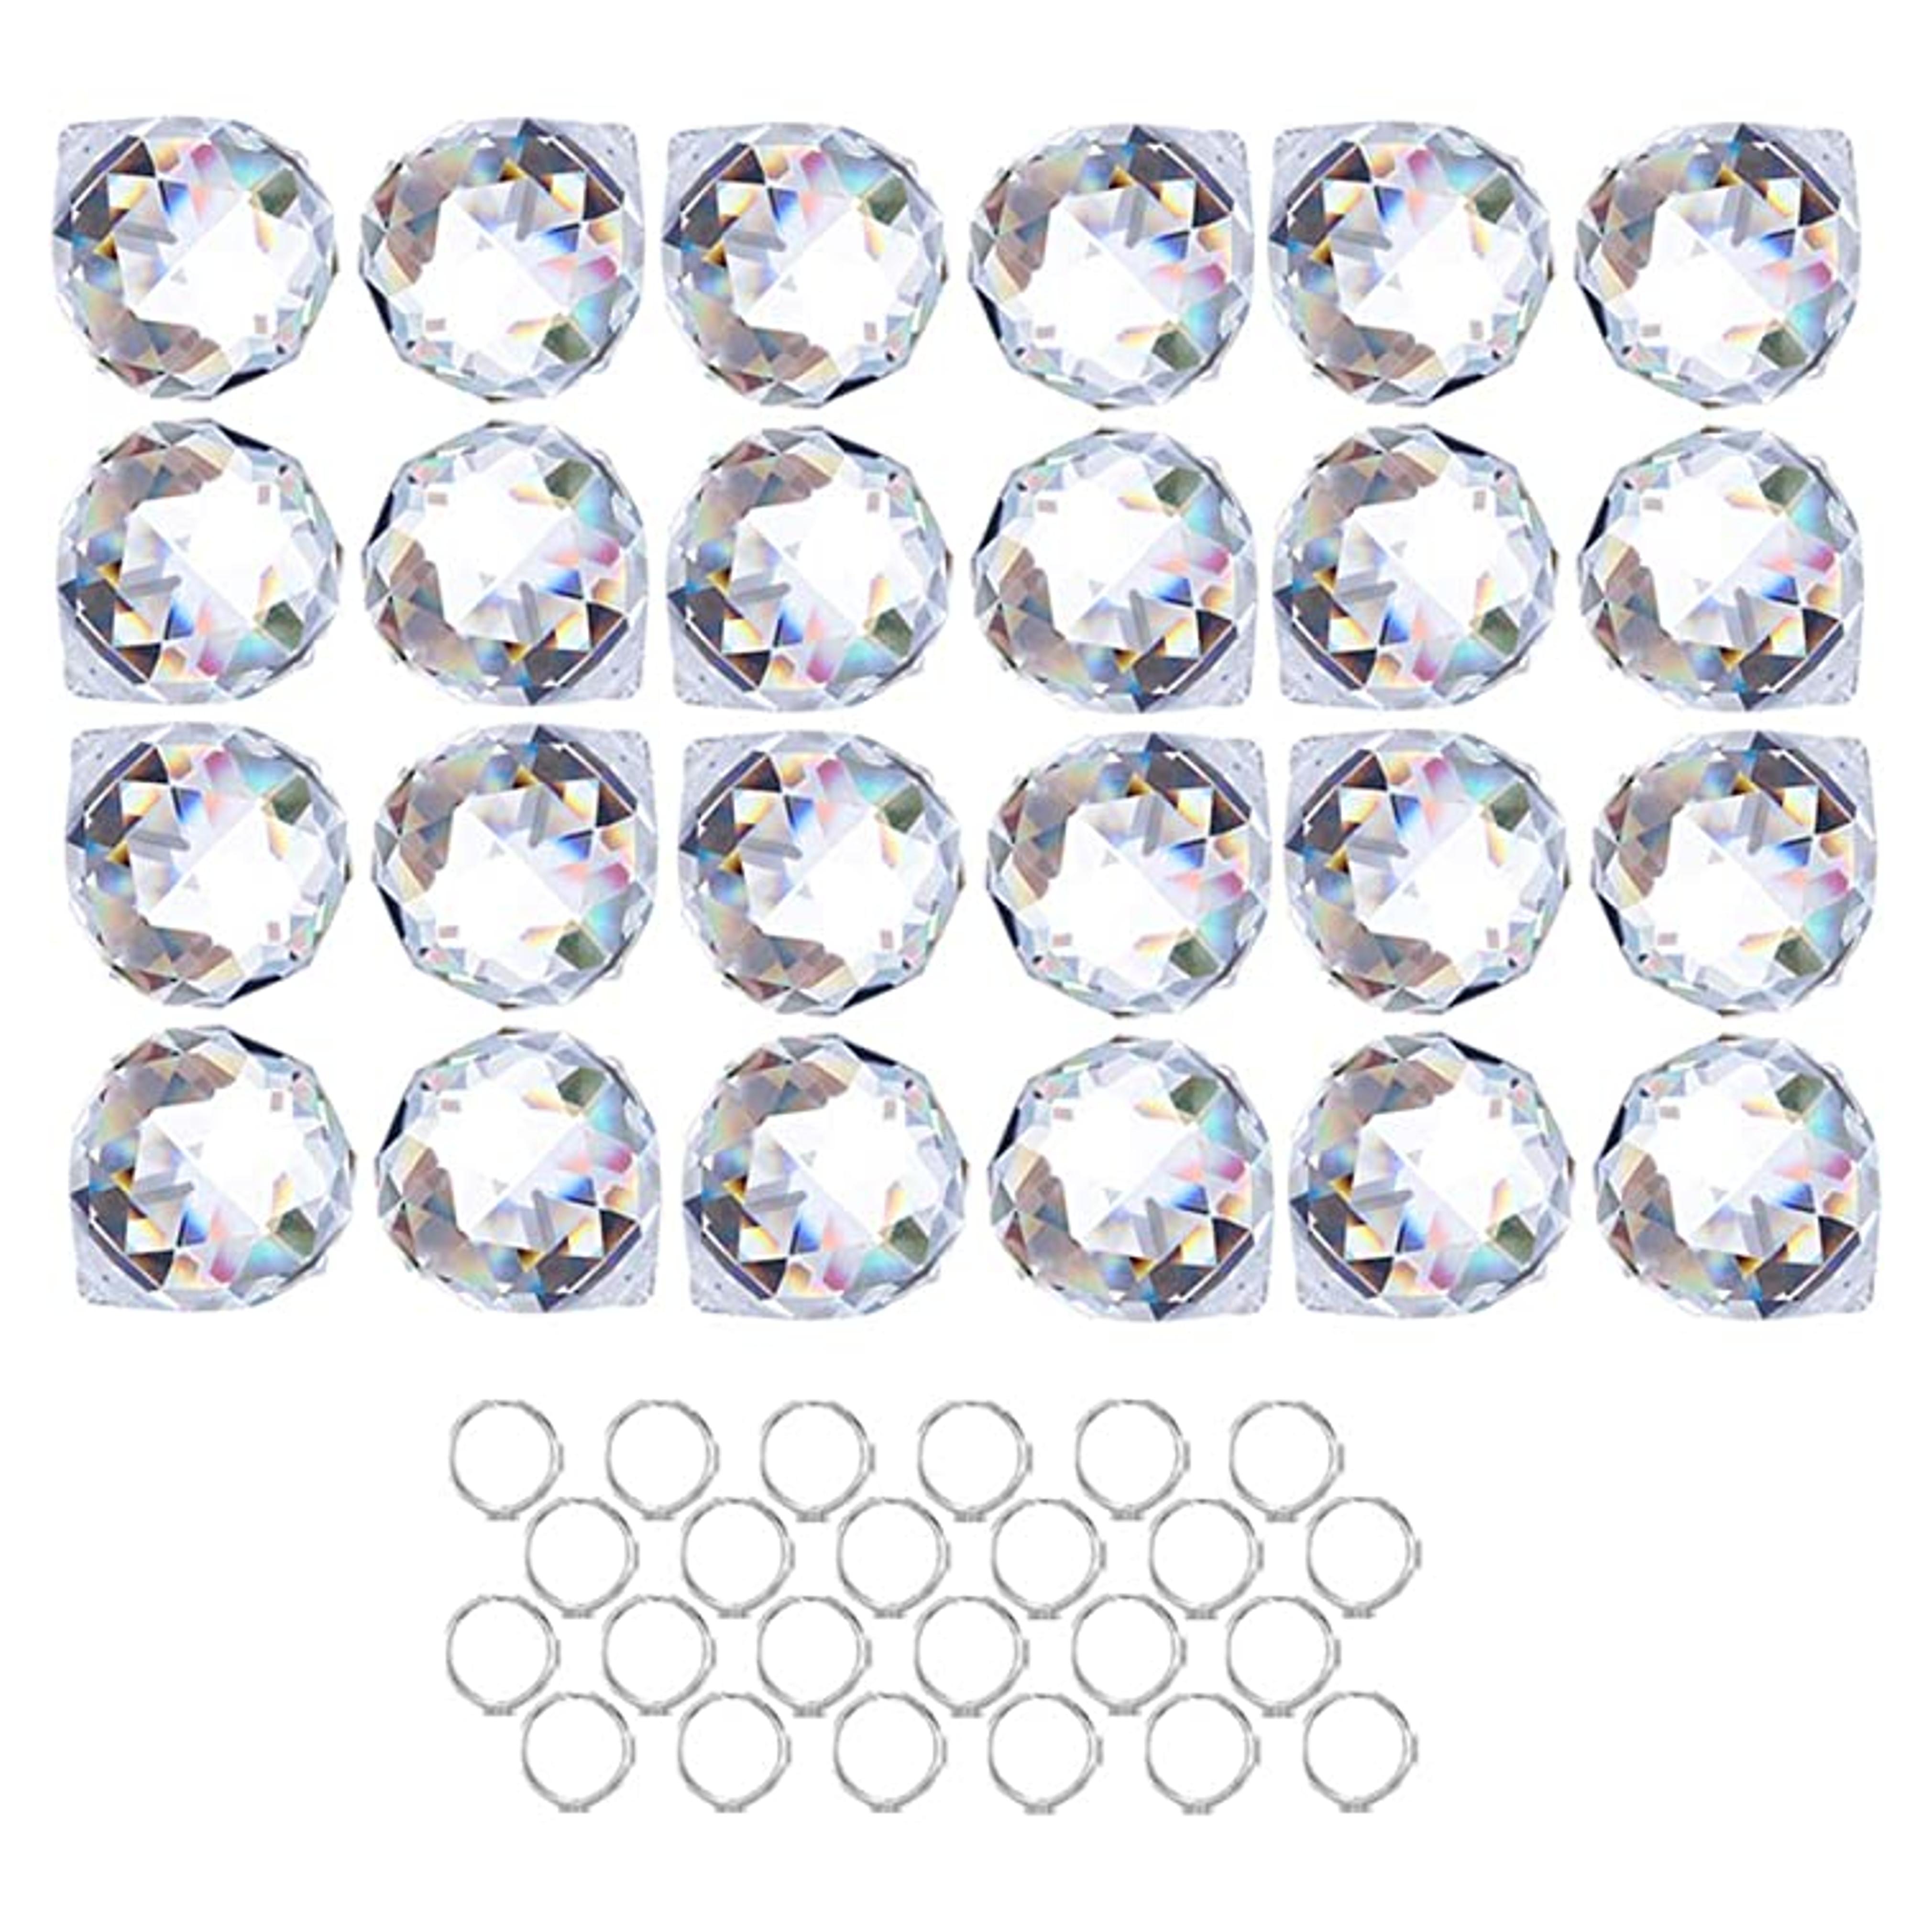 Crystalsuncatcher 24pcs Clear Crystal Ball Prism Suncatcher Rainbow Pendants Maker, Hanging Crystals Prisms for Windows,20mm